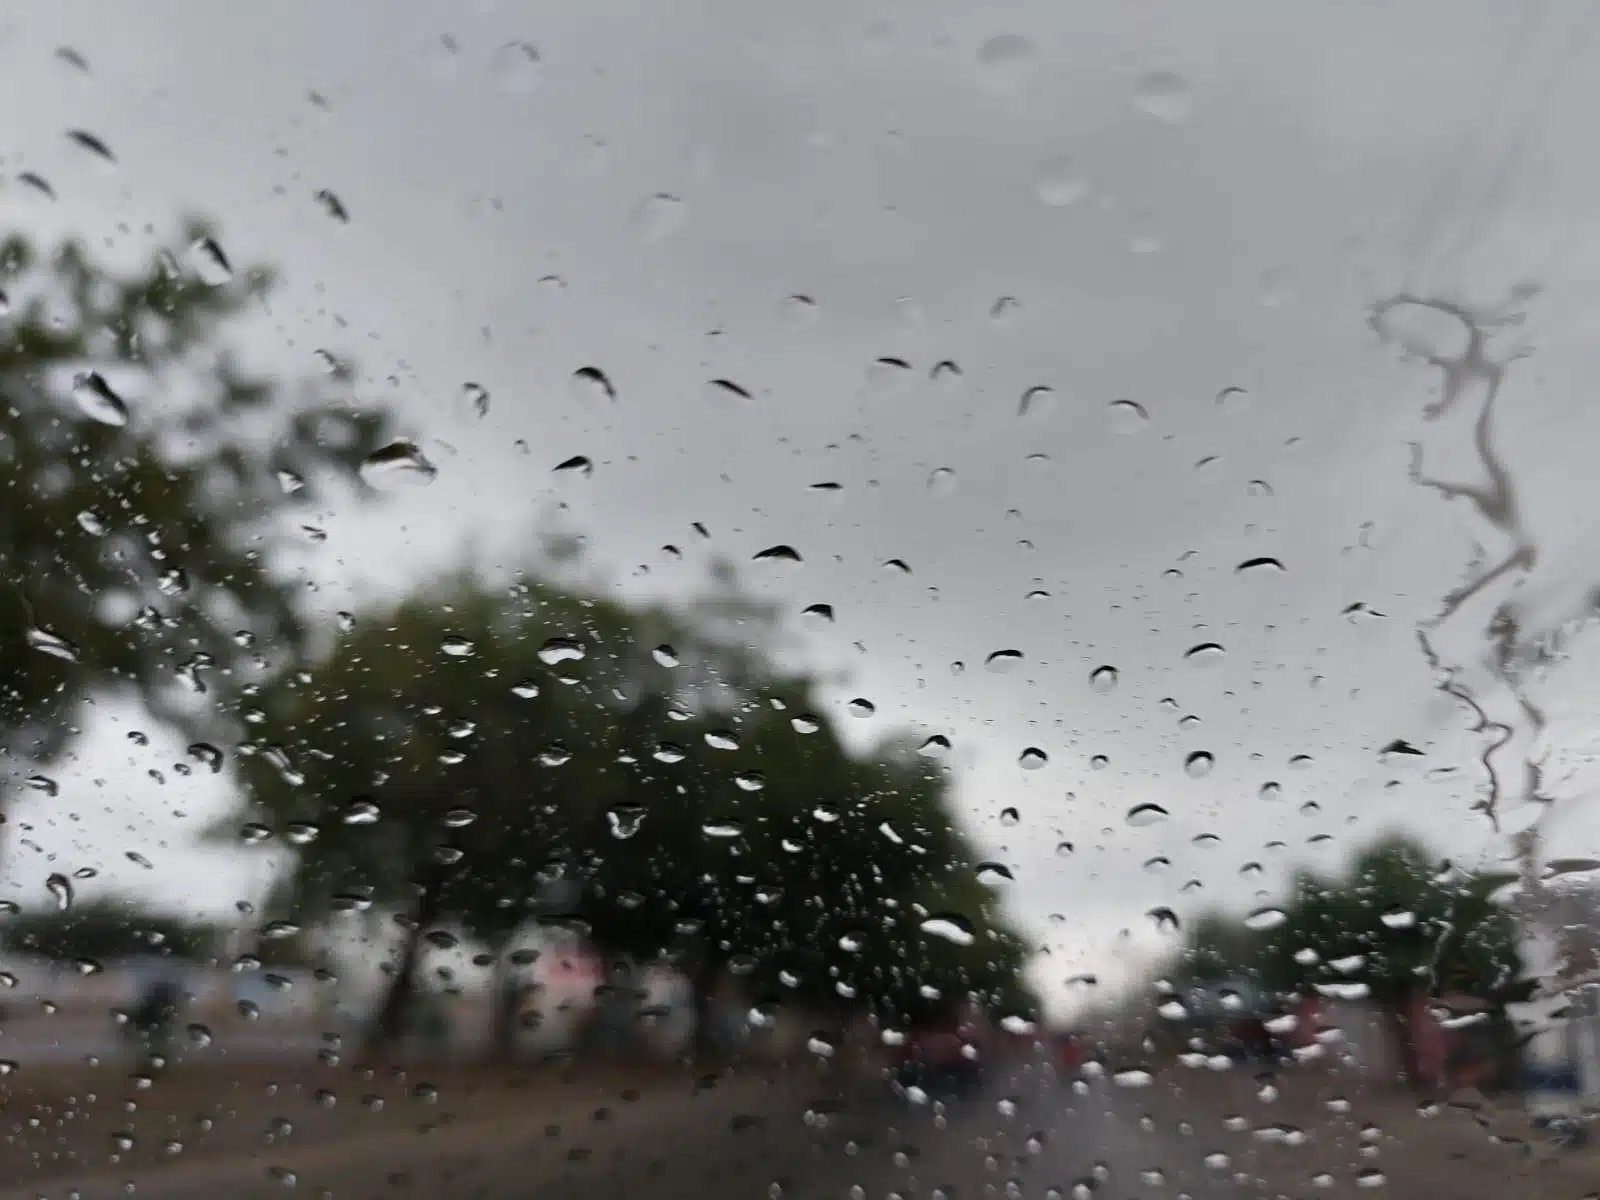 Cristal de un vehículo con gotas de lluvia